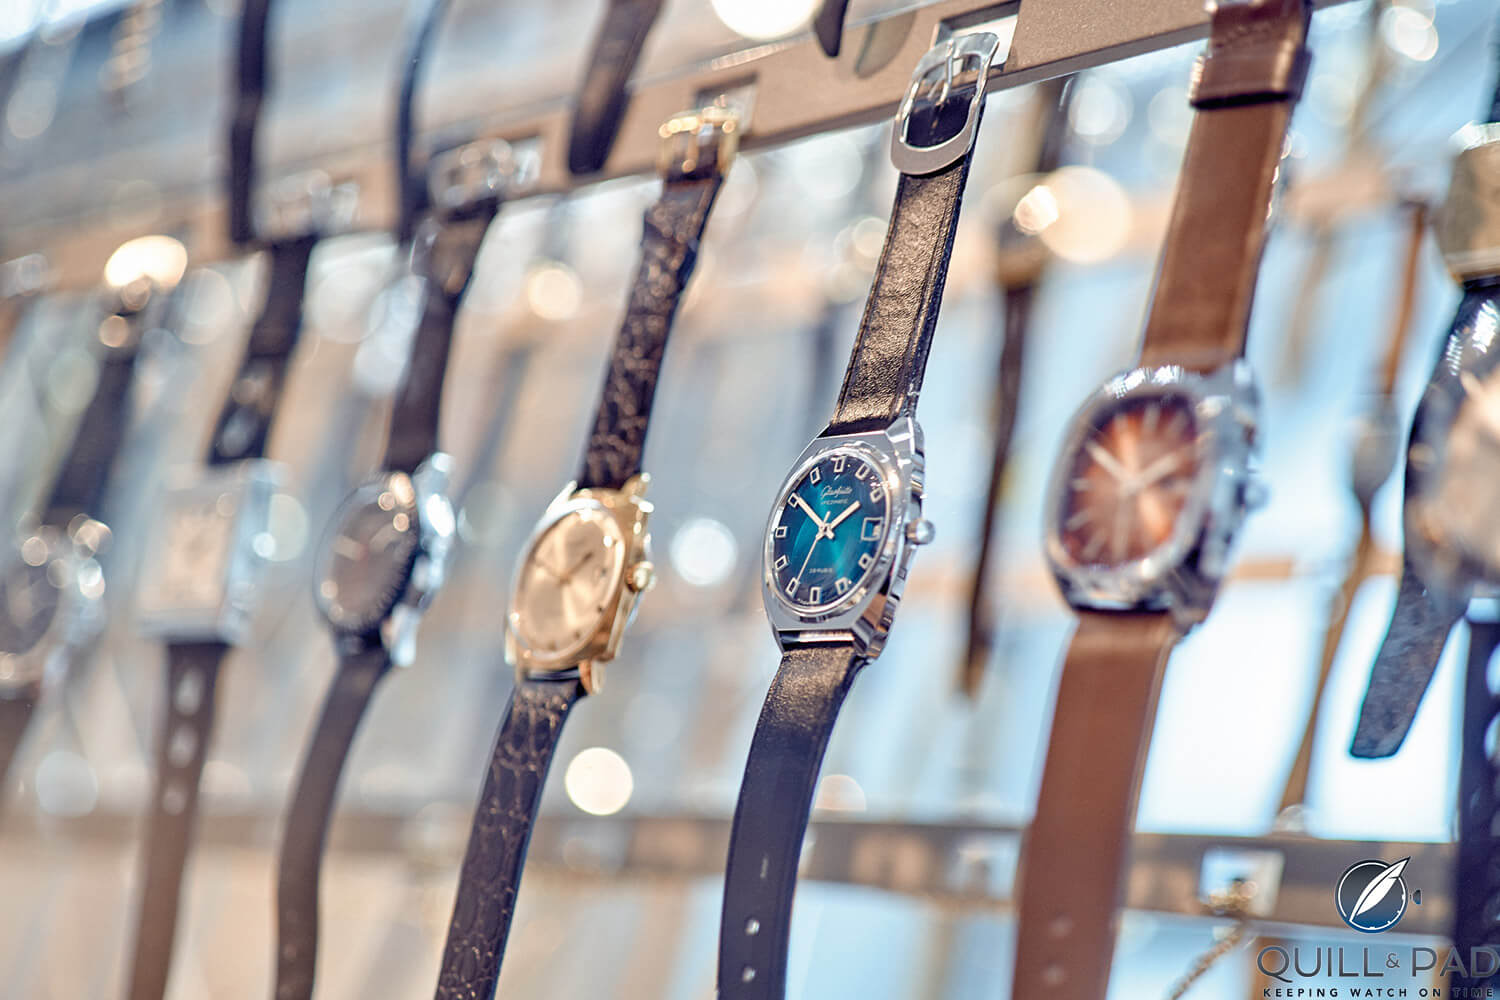 Colorful Glashütte Original watches on display at the German Watchmaking Museum in Glashütte